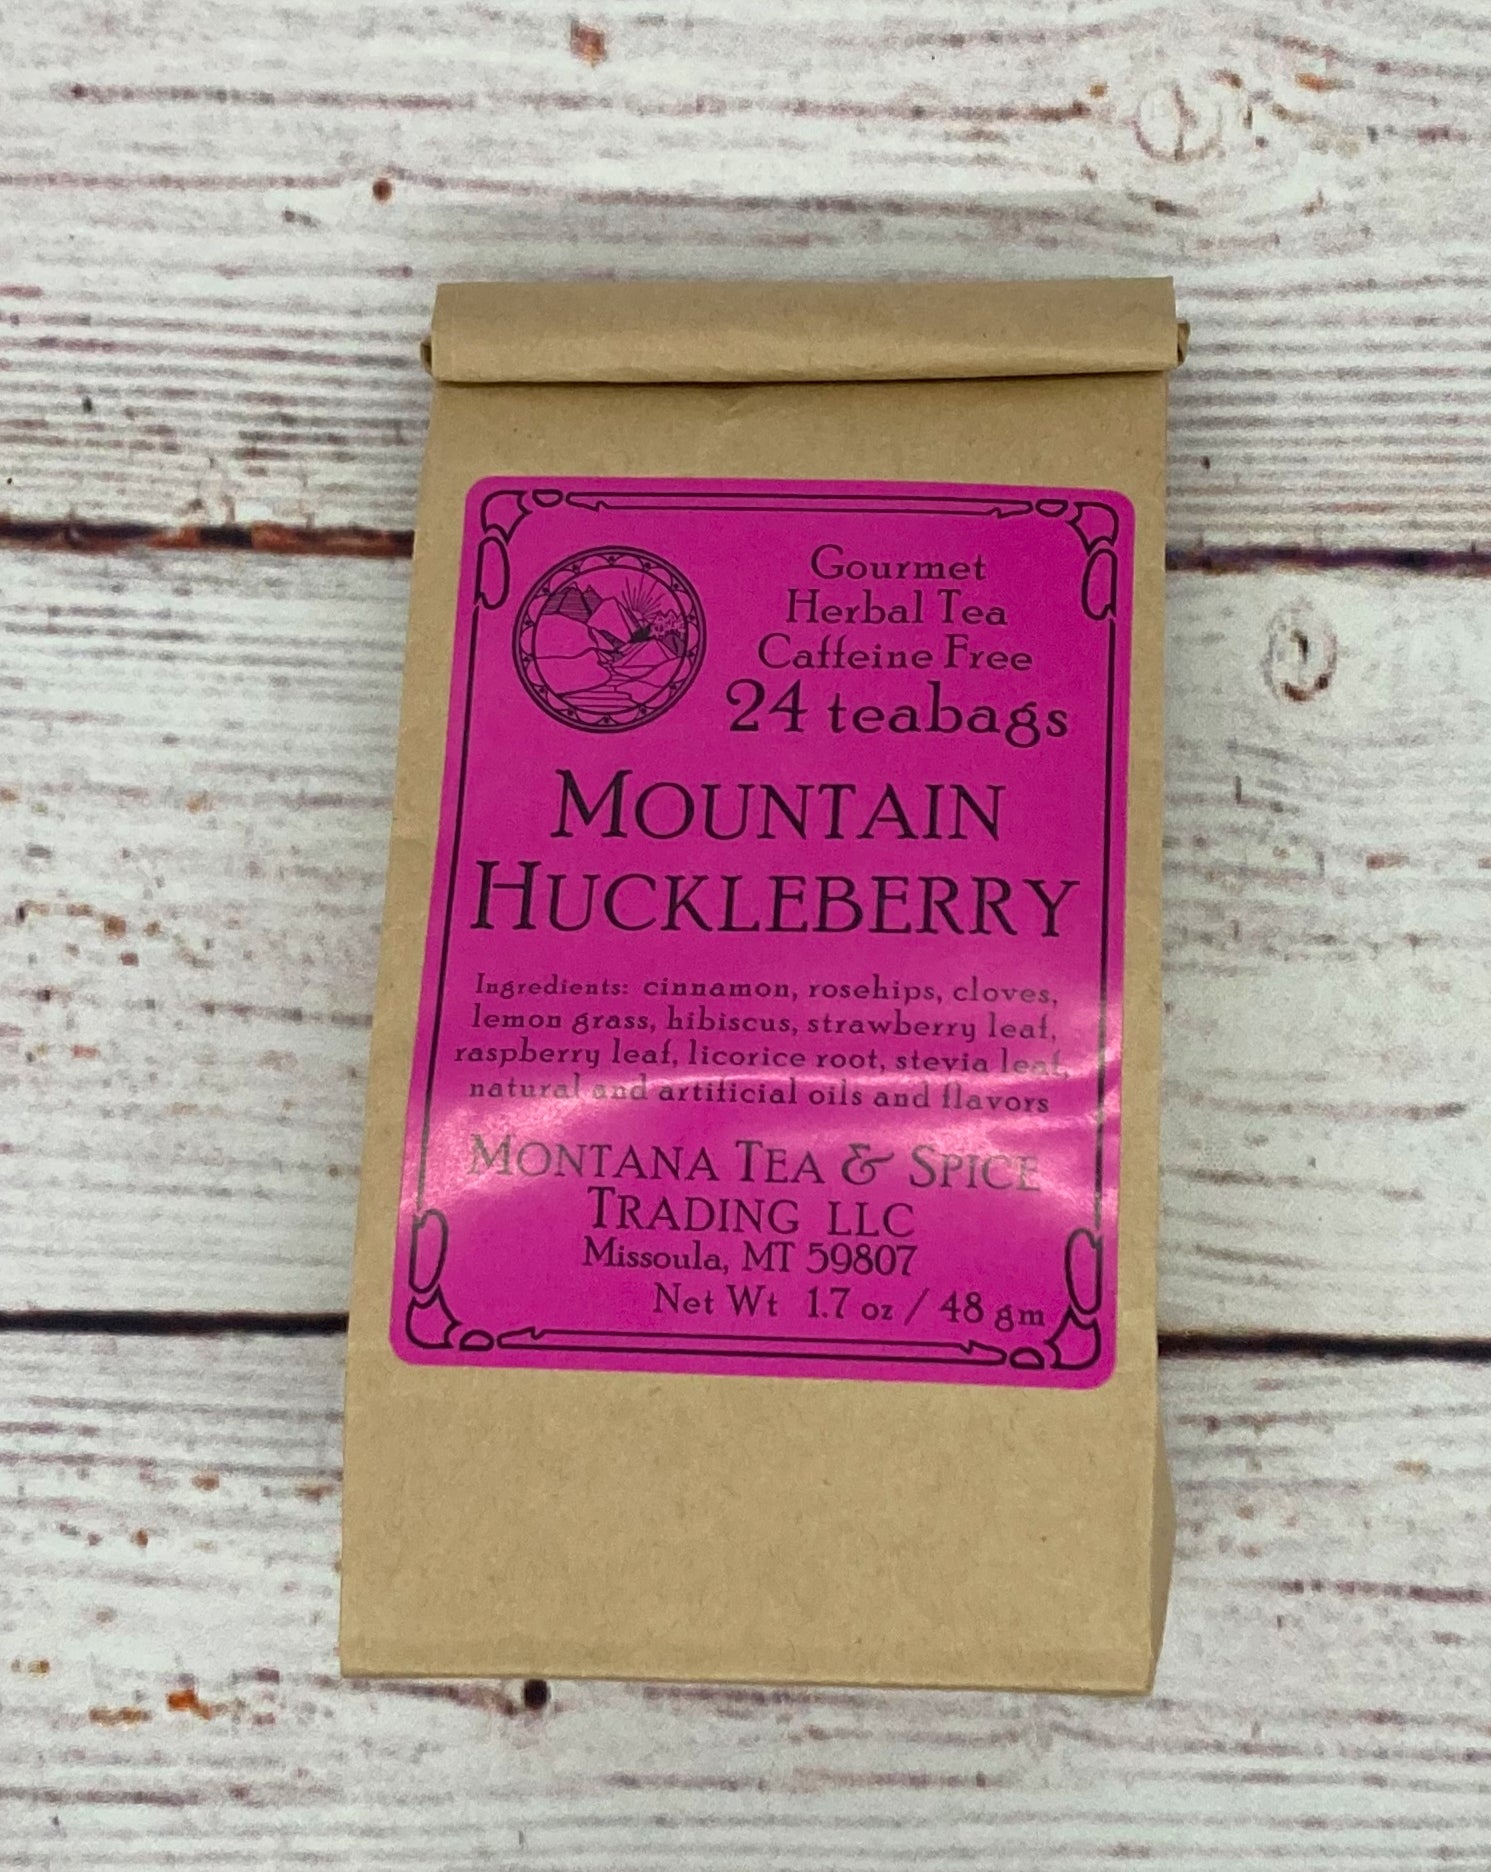 Mountain Huckleberry Gourmet Herbal Tea. Caffeine free. 24 tea bags. Montana Tea and Spice Trading Company. Made in Missoula, Montana.